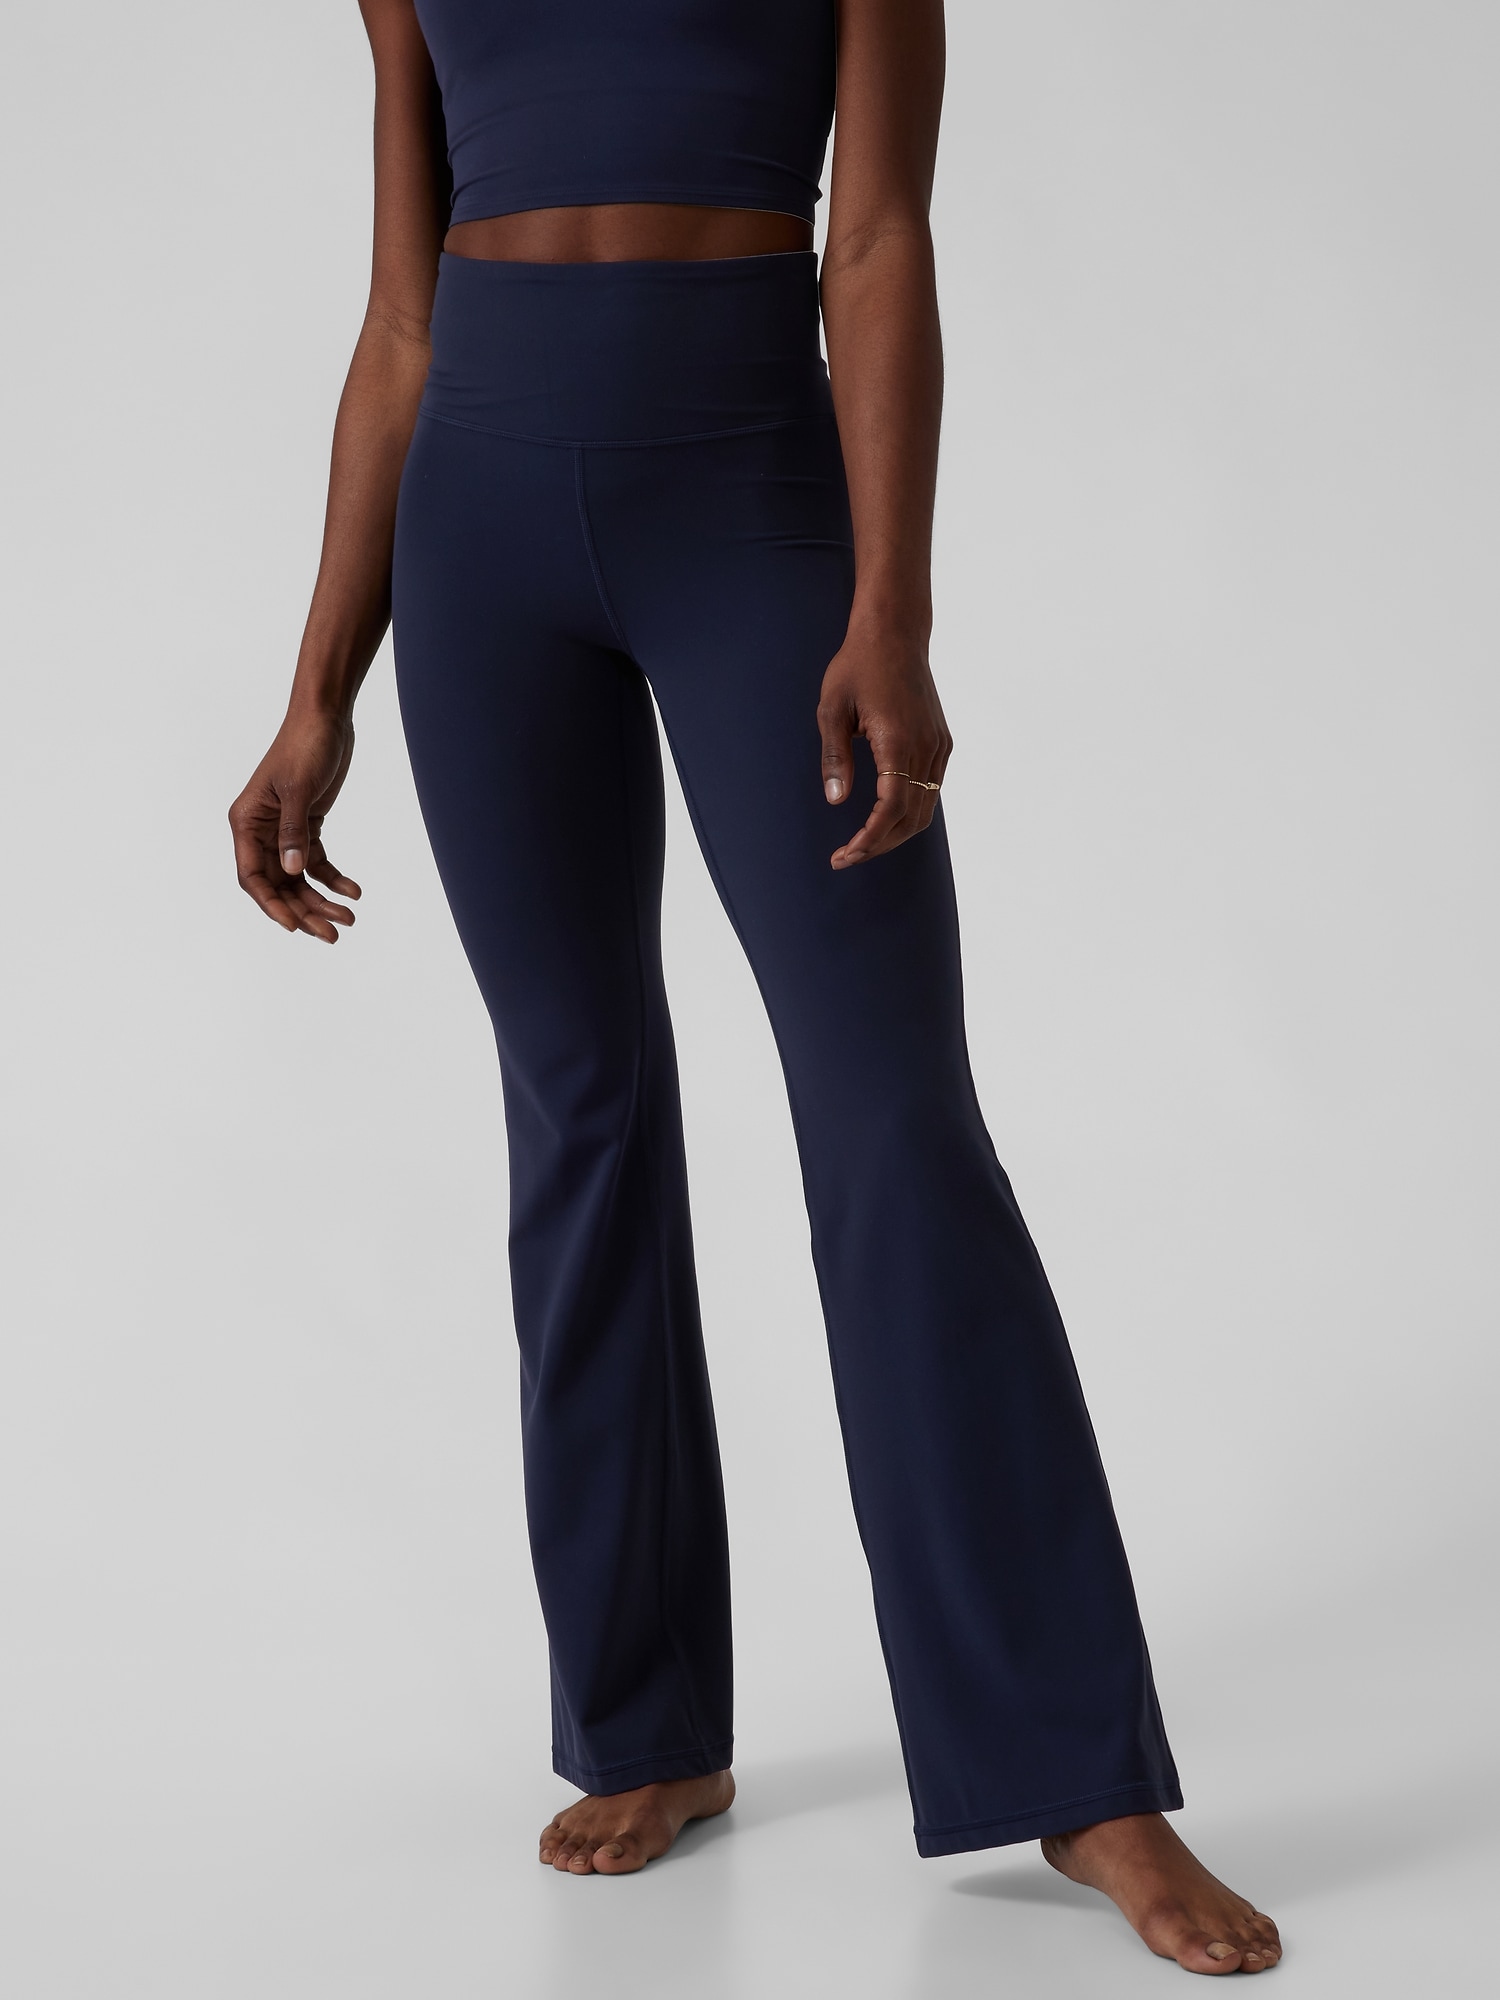 Margarita Super Flare Yoga Pants in Black w/ Lavender Ribbon Size 1 (XS /  Small)